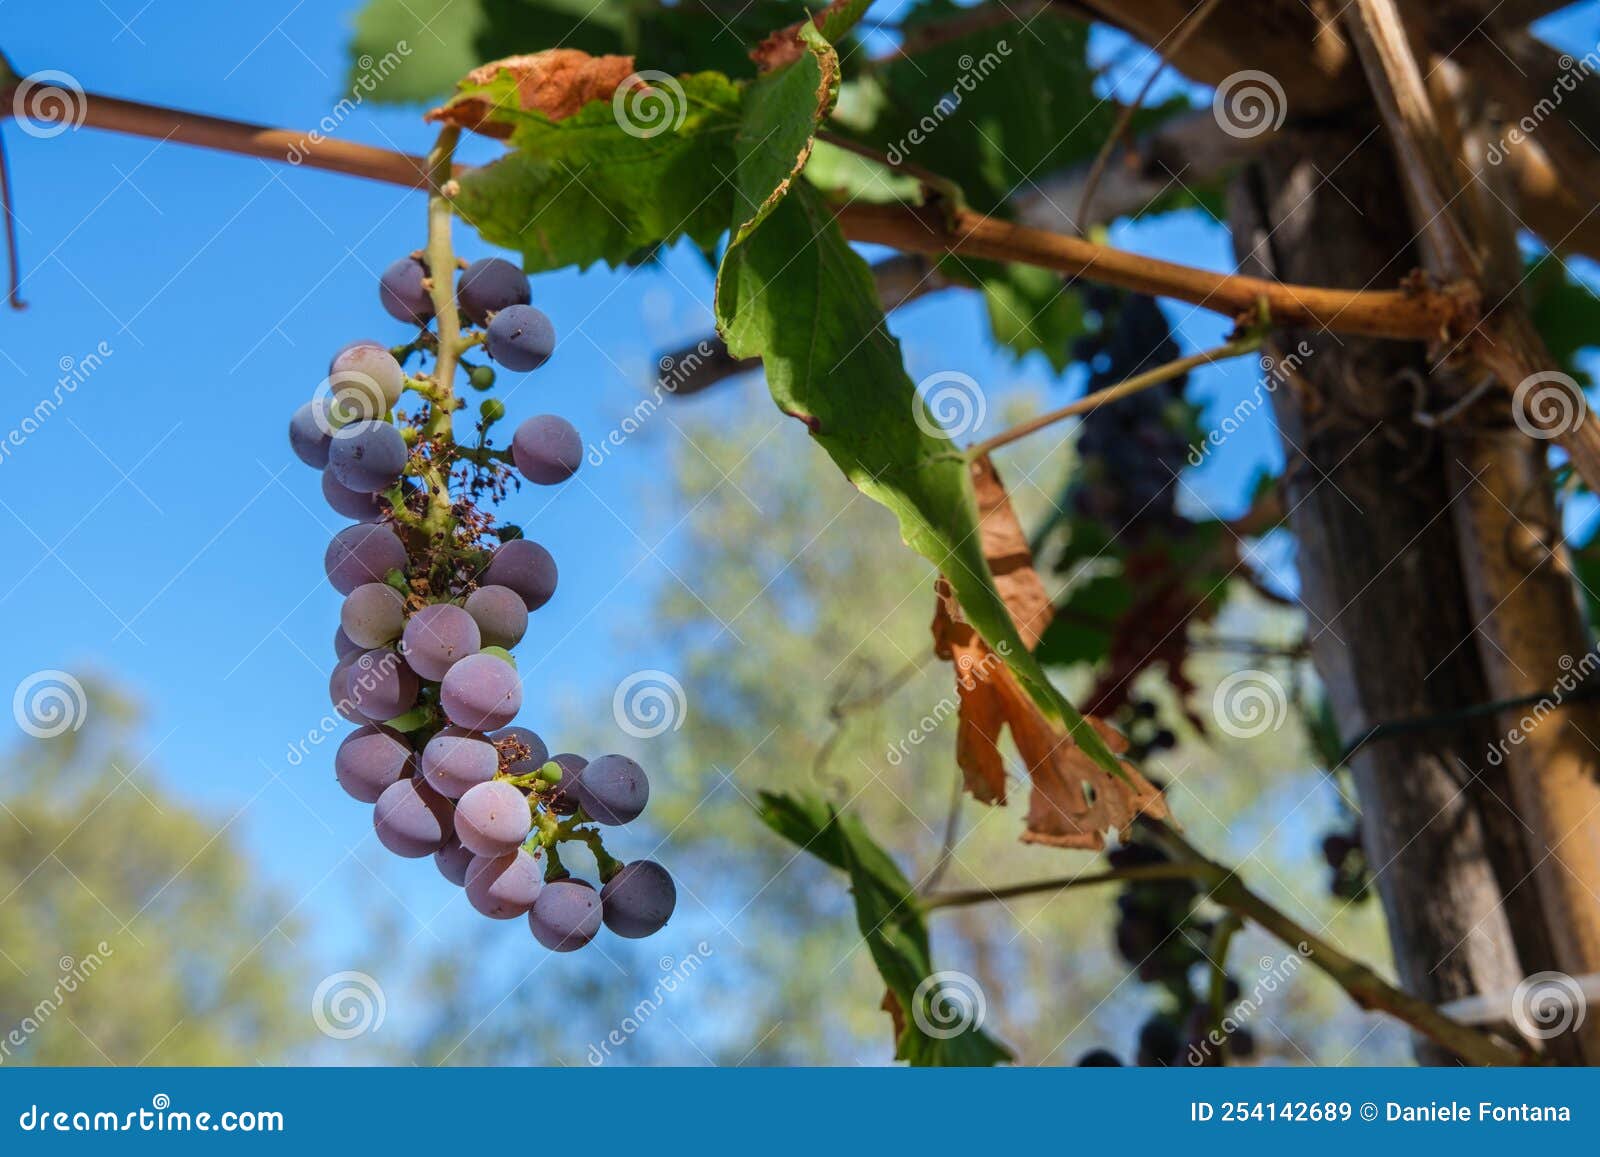 seasonal fruits grapes against blue sky sardinian wines